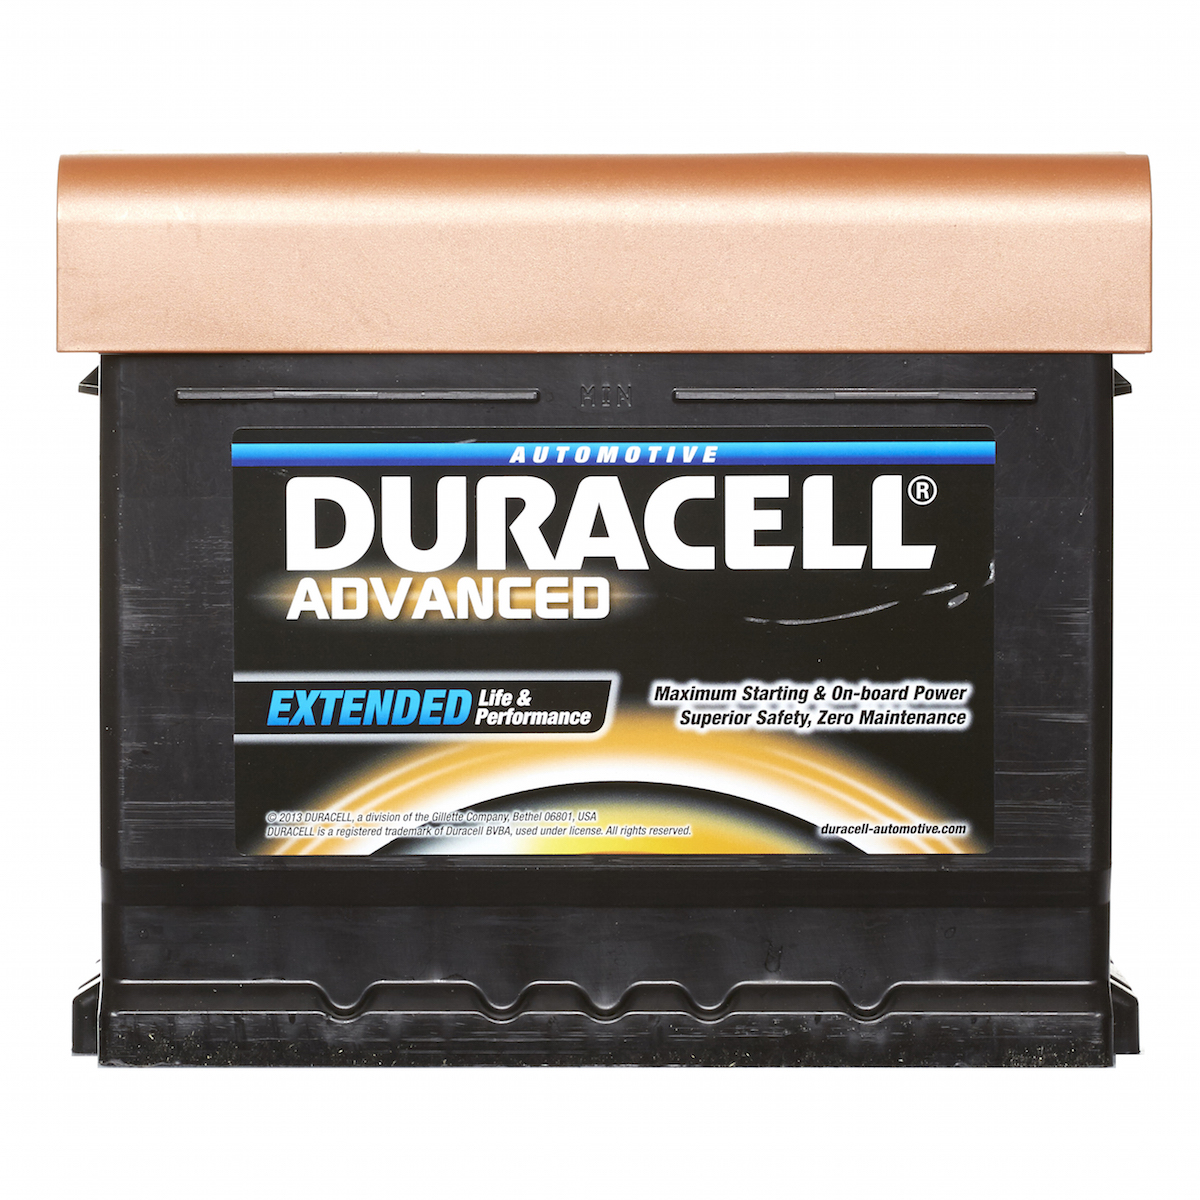 Euro Car Parts stocks Duracell car batteries : Tyrepress